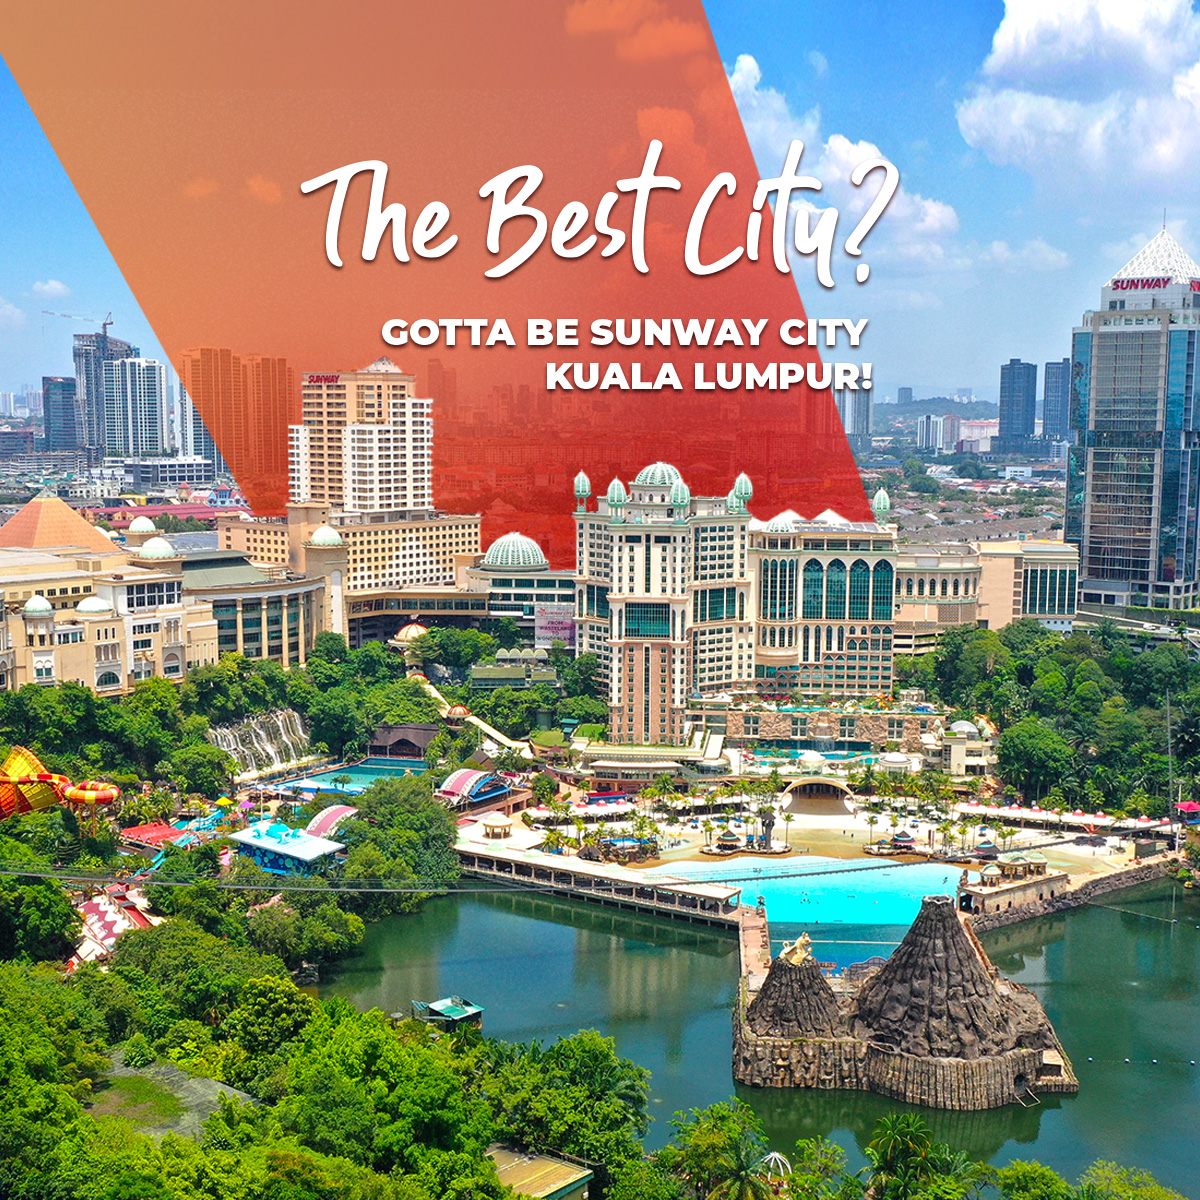 The Best City? Gotta Be Sunway City Kuala Lumpur